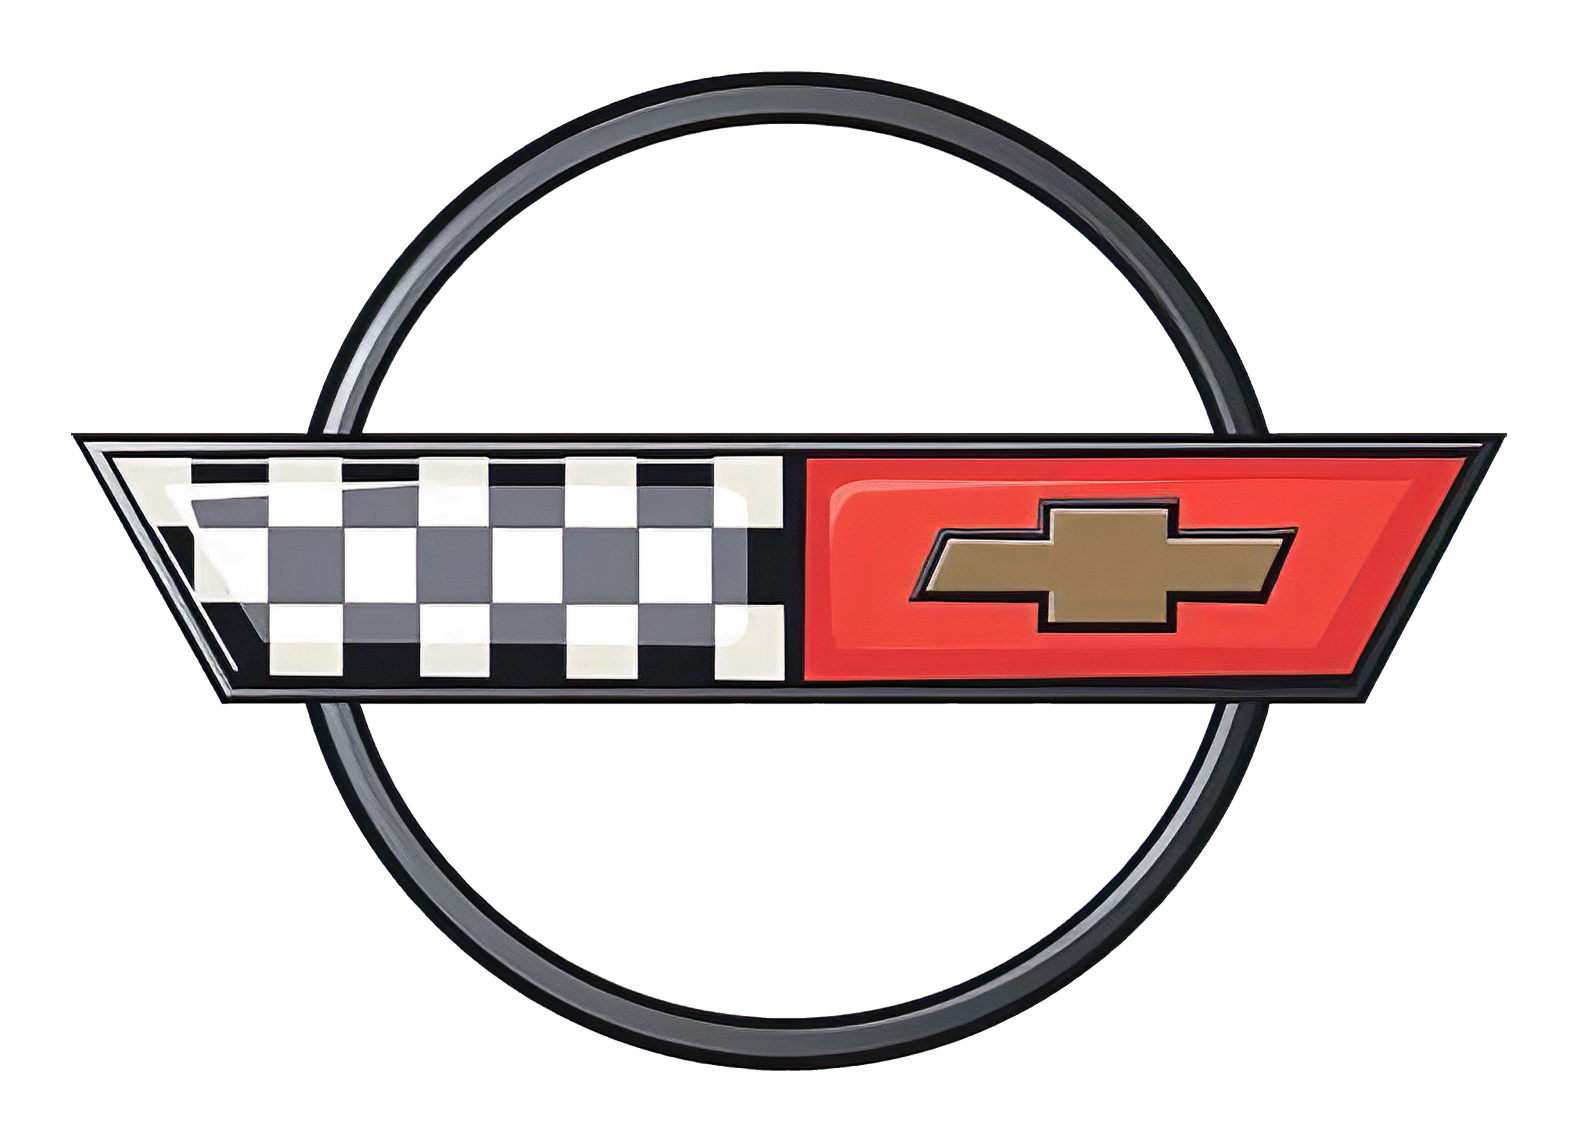 Corvette Logo PNG Image